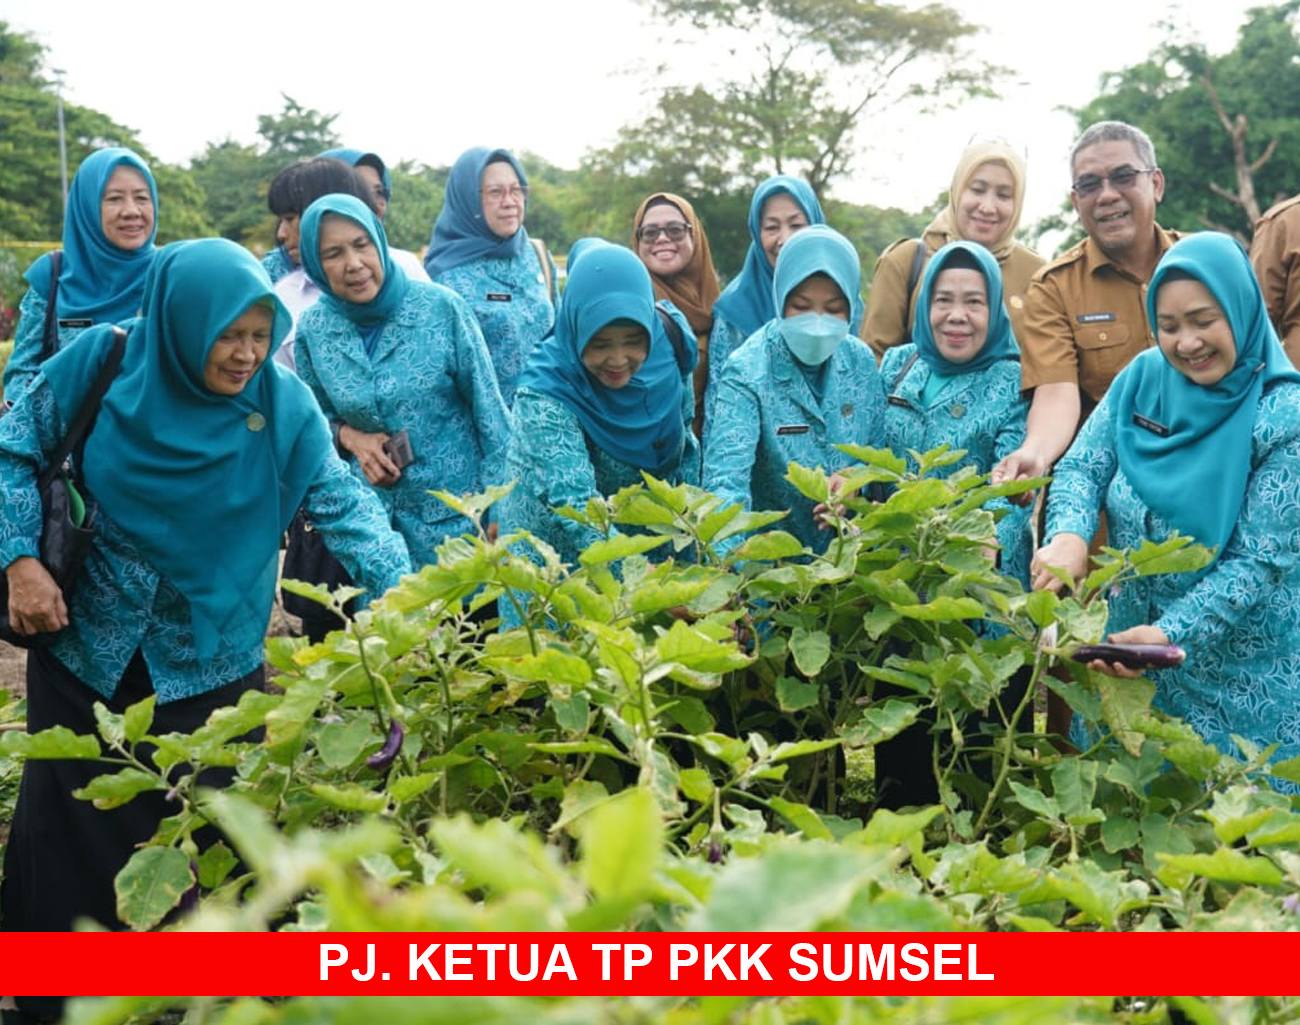 Pj Ketua TP PKKK Sumsel Tyas Fatoni Panen Sayur di Kitchen Garden JSC Palembang, Edukasi Tekan Inflasi